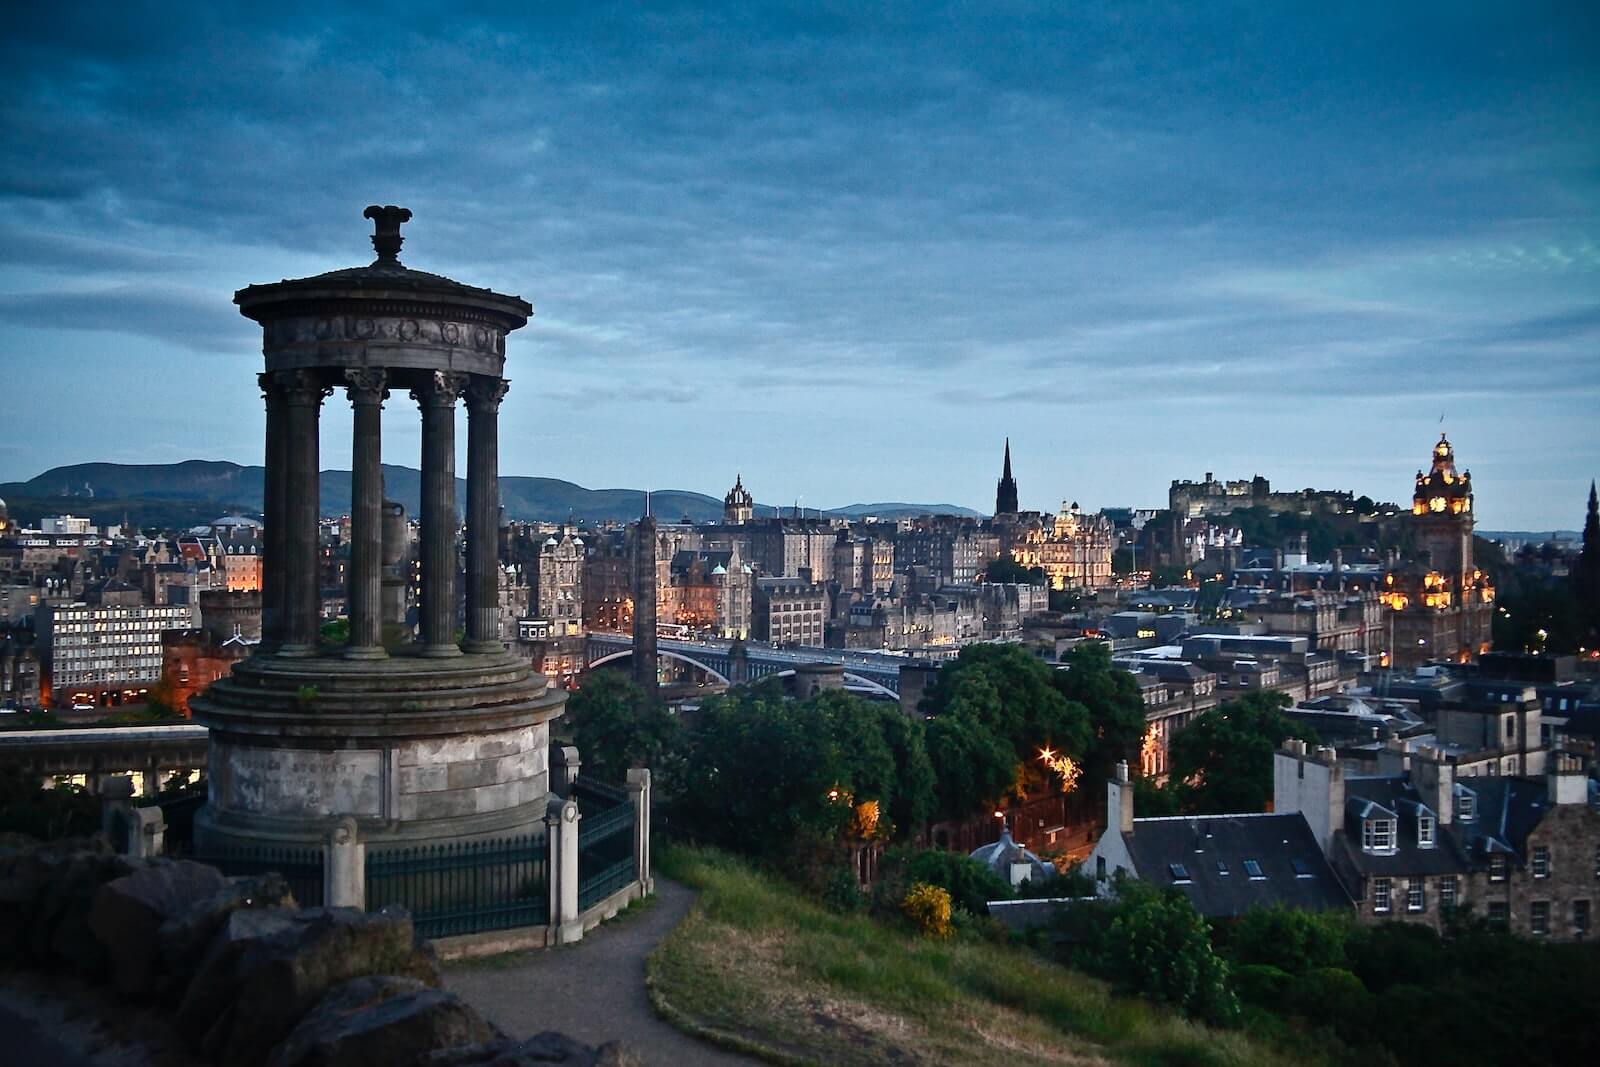 Skyline and buildings in Edinburgh Scotland